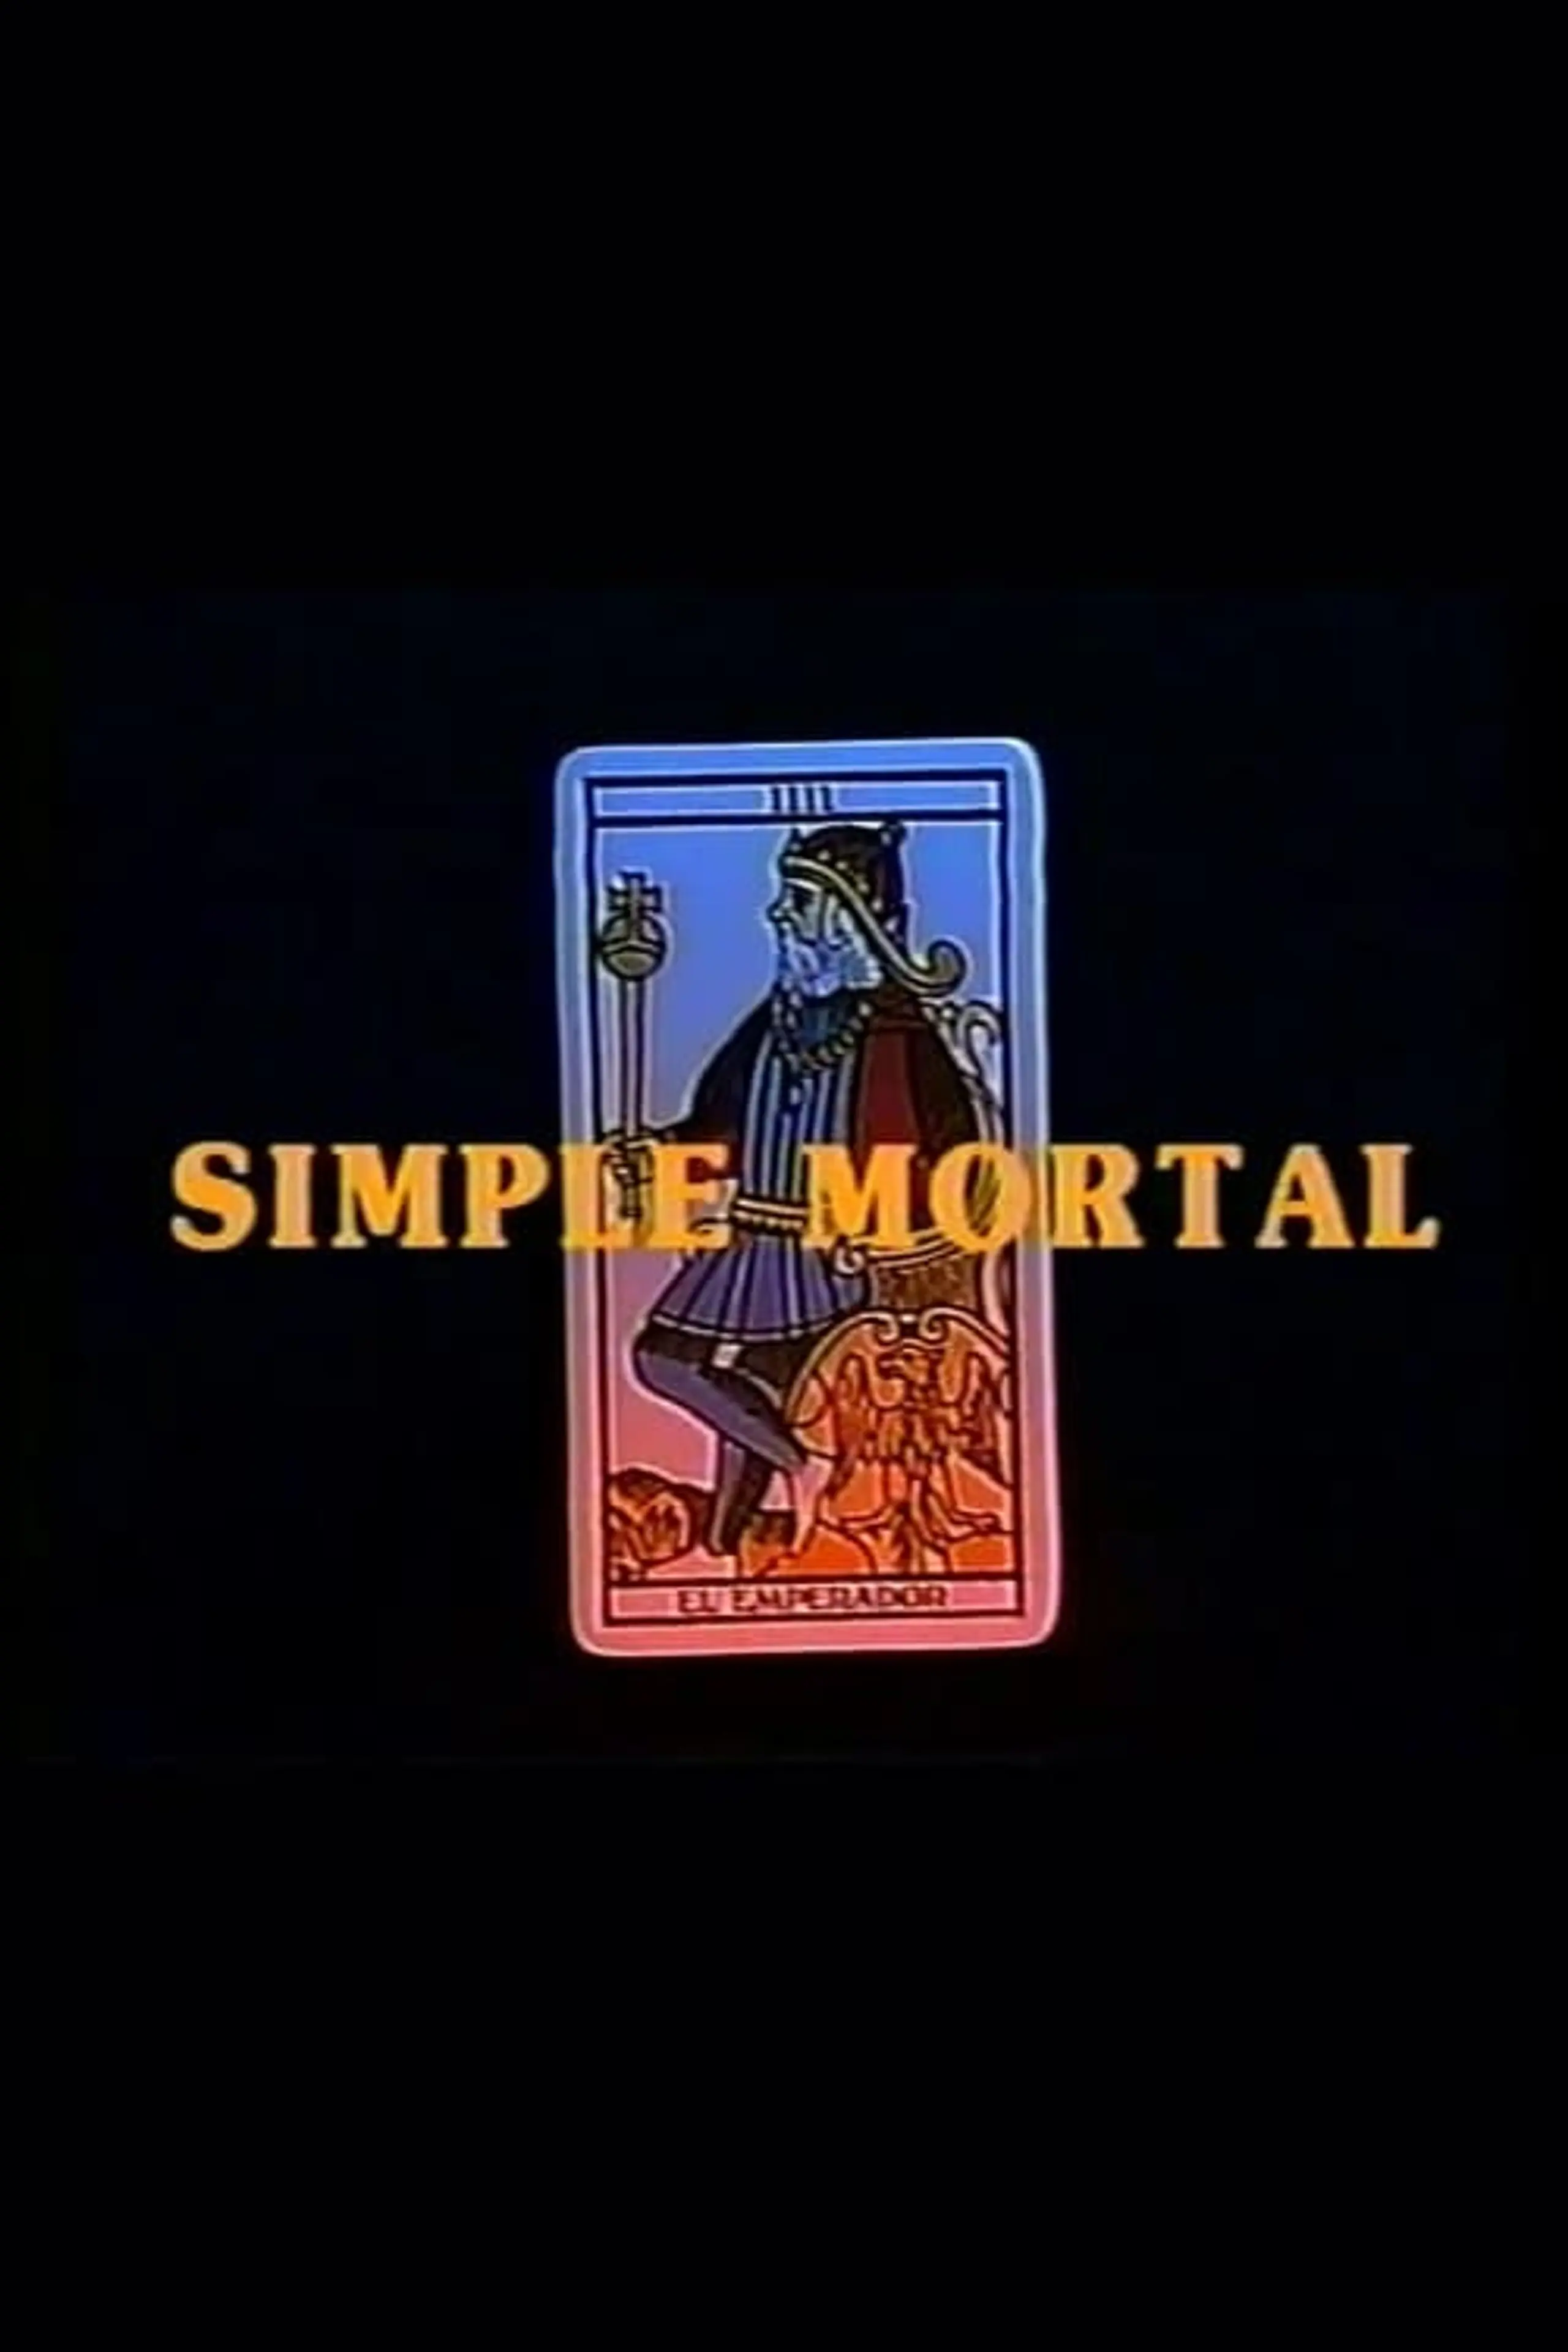 Simple mortal